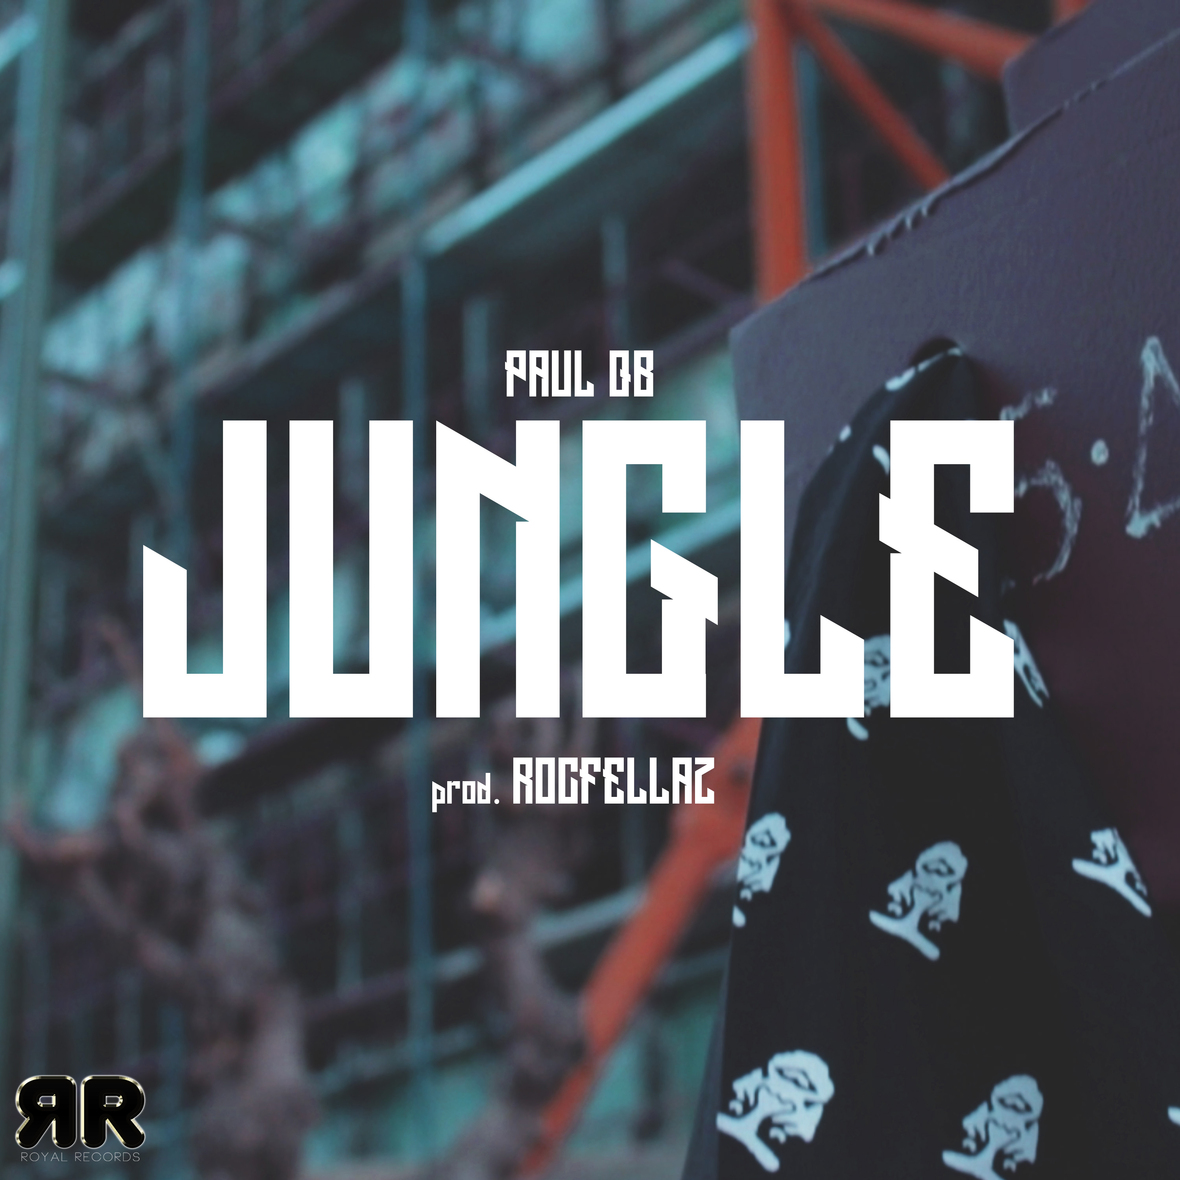 Paul QB - Jungle Official digital single cover 2019 